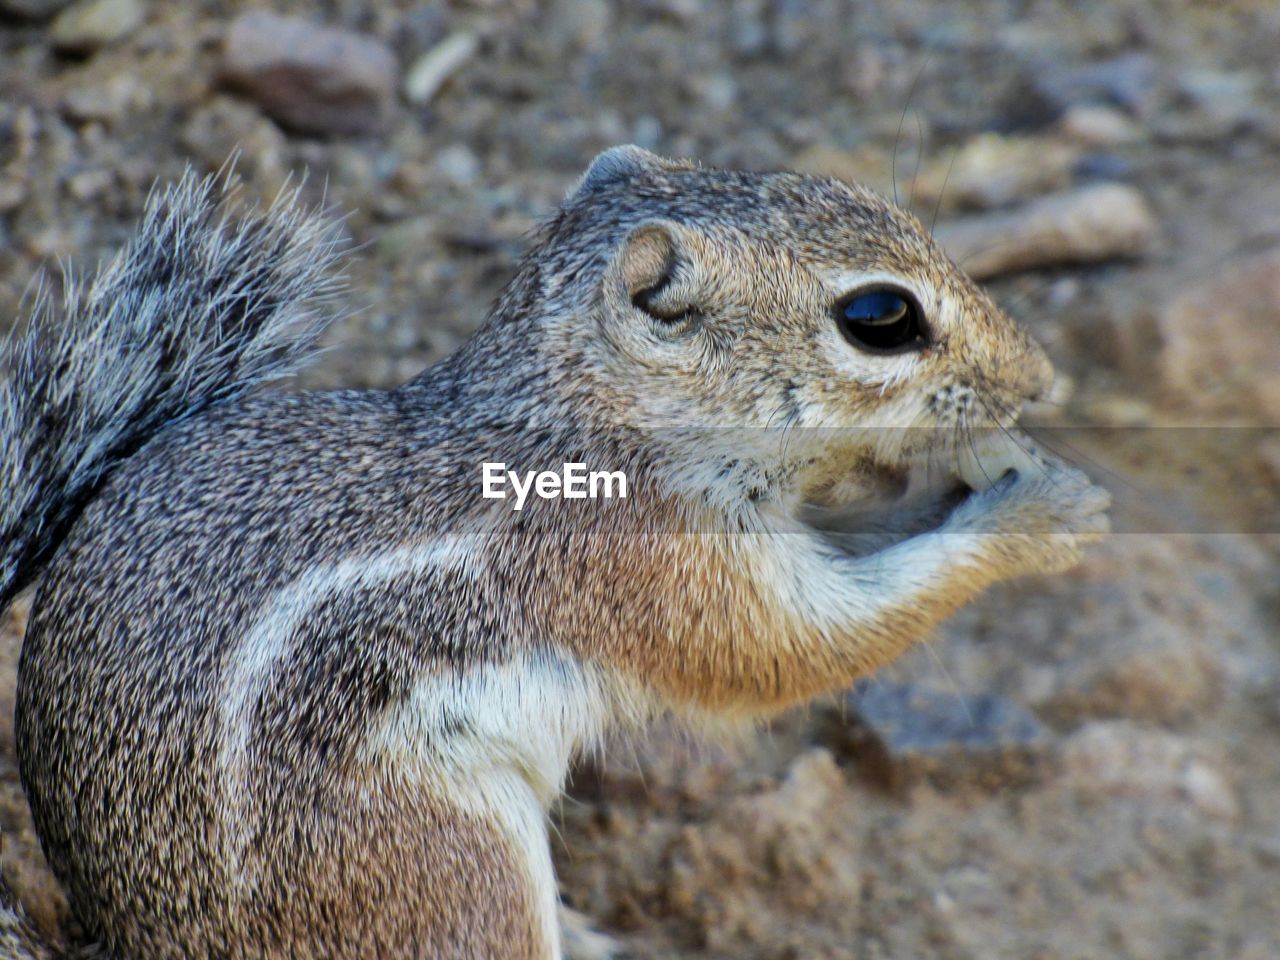 Close up of a squirrel